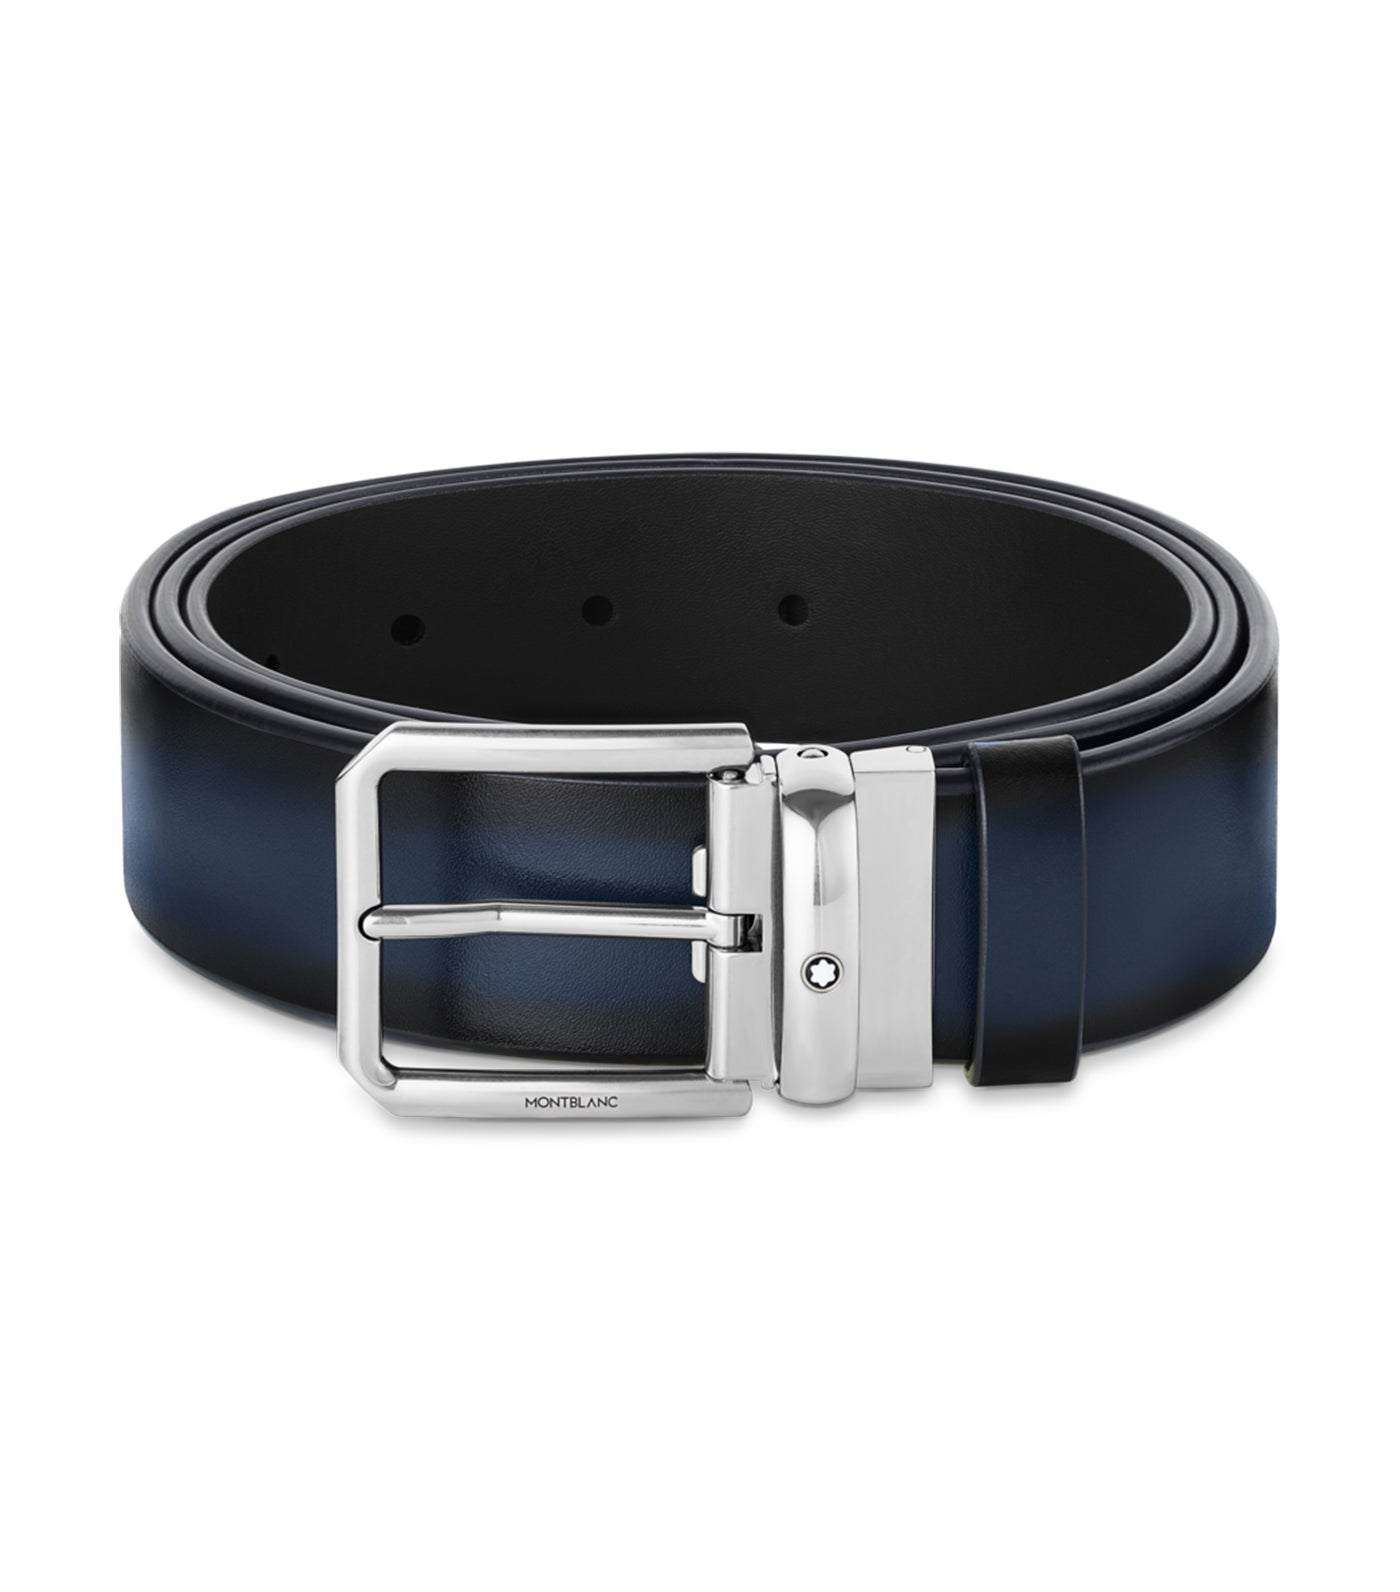 Horseshoe buckle black/brown 30 mm reversible leather belt - Luxury Belts